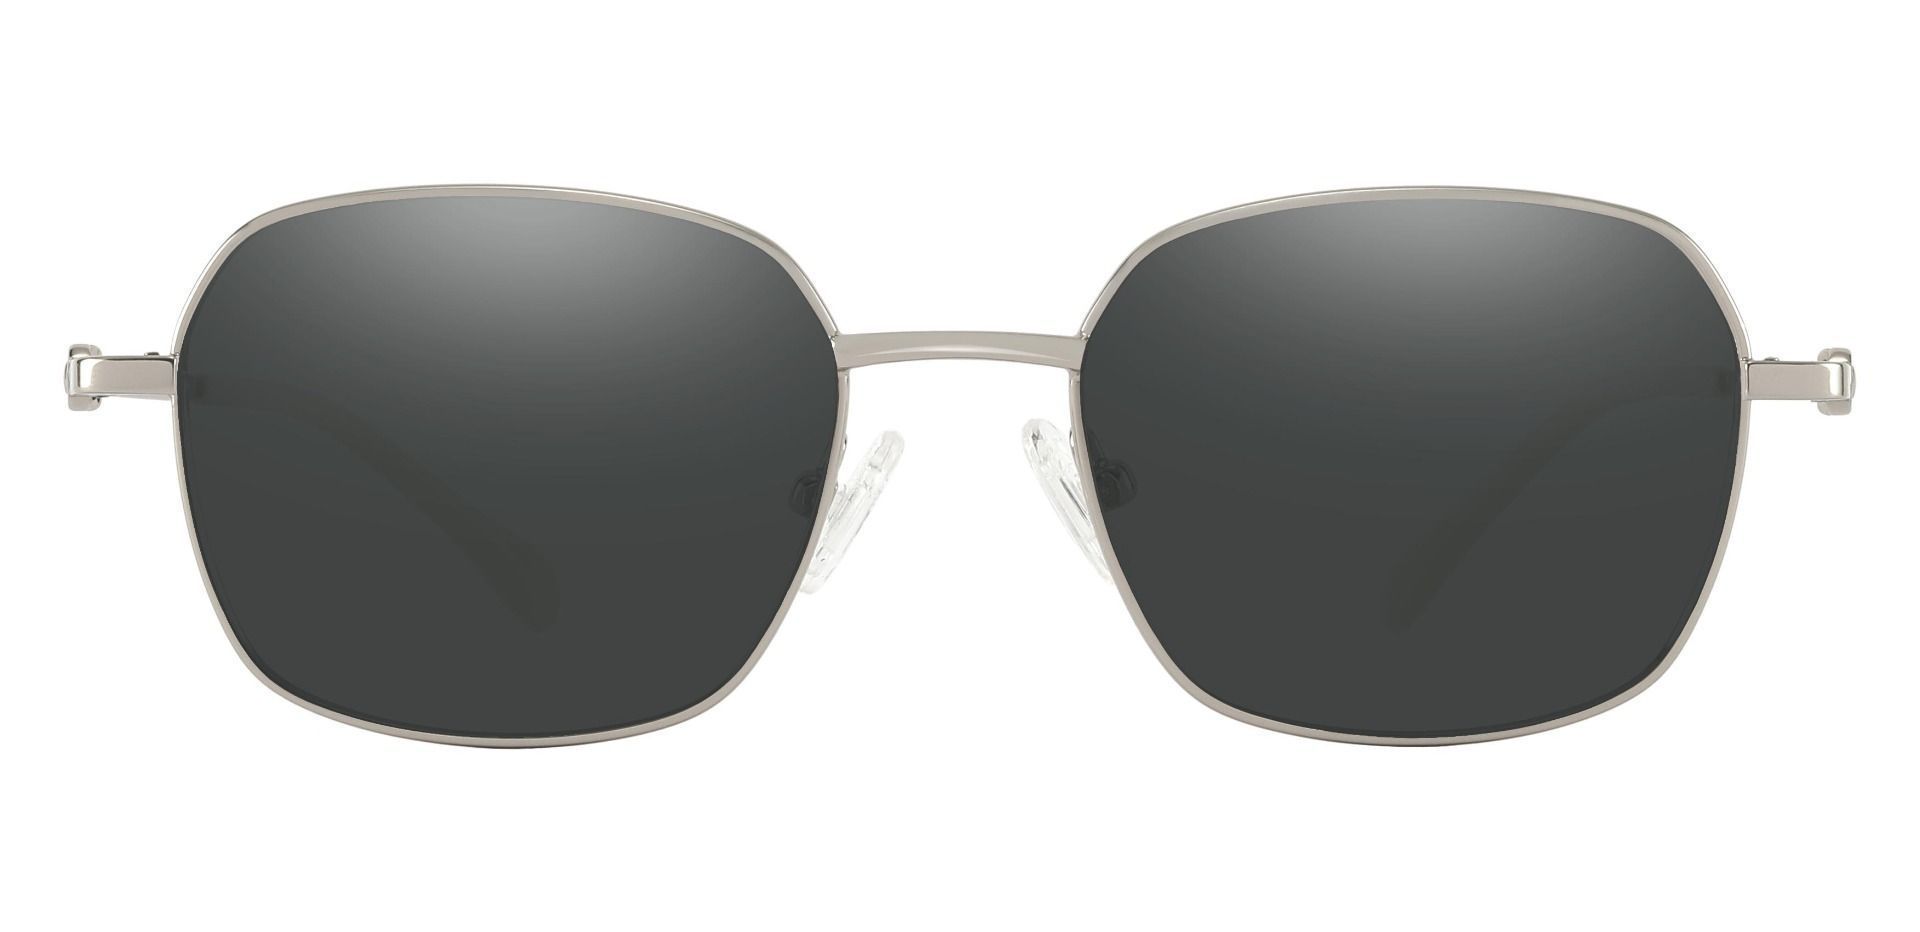 Averill Geometric Progressive Sunglasses - Silver Frame With Gray Lenses